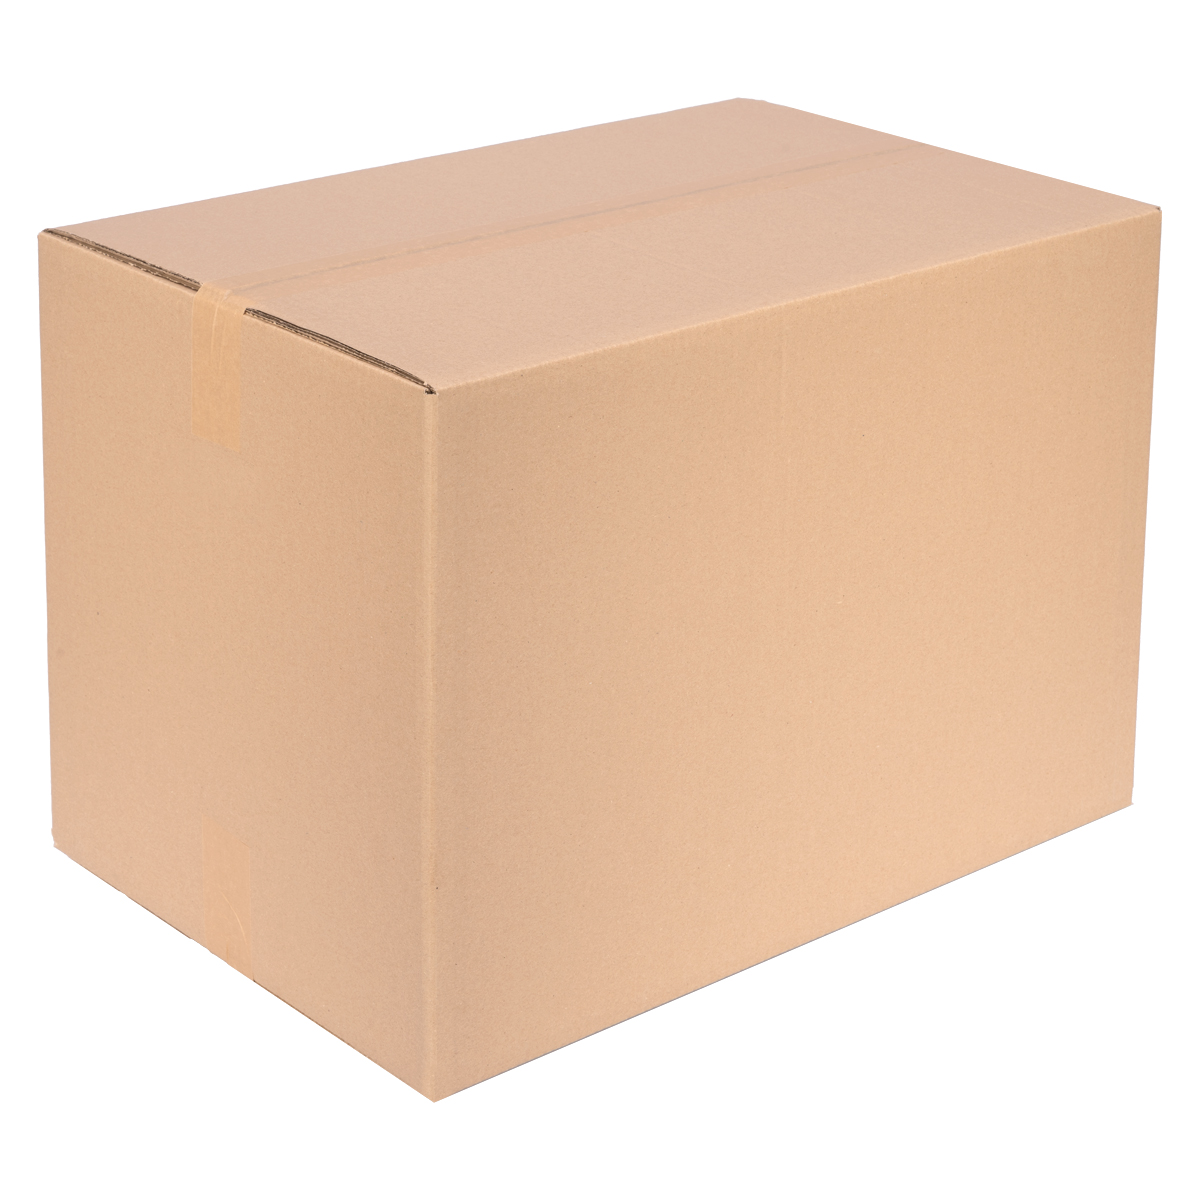 Cardboard box, double wall, 600x400x400 mm - KK 107